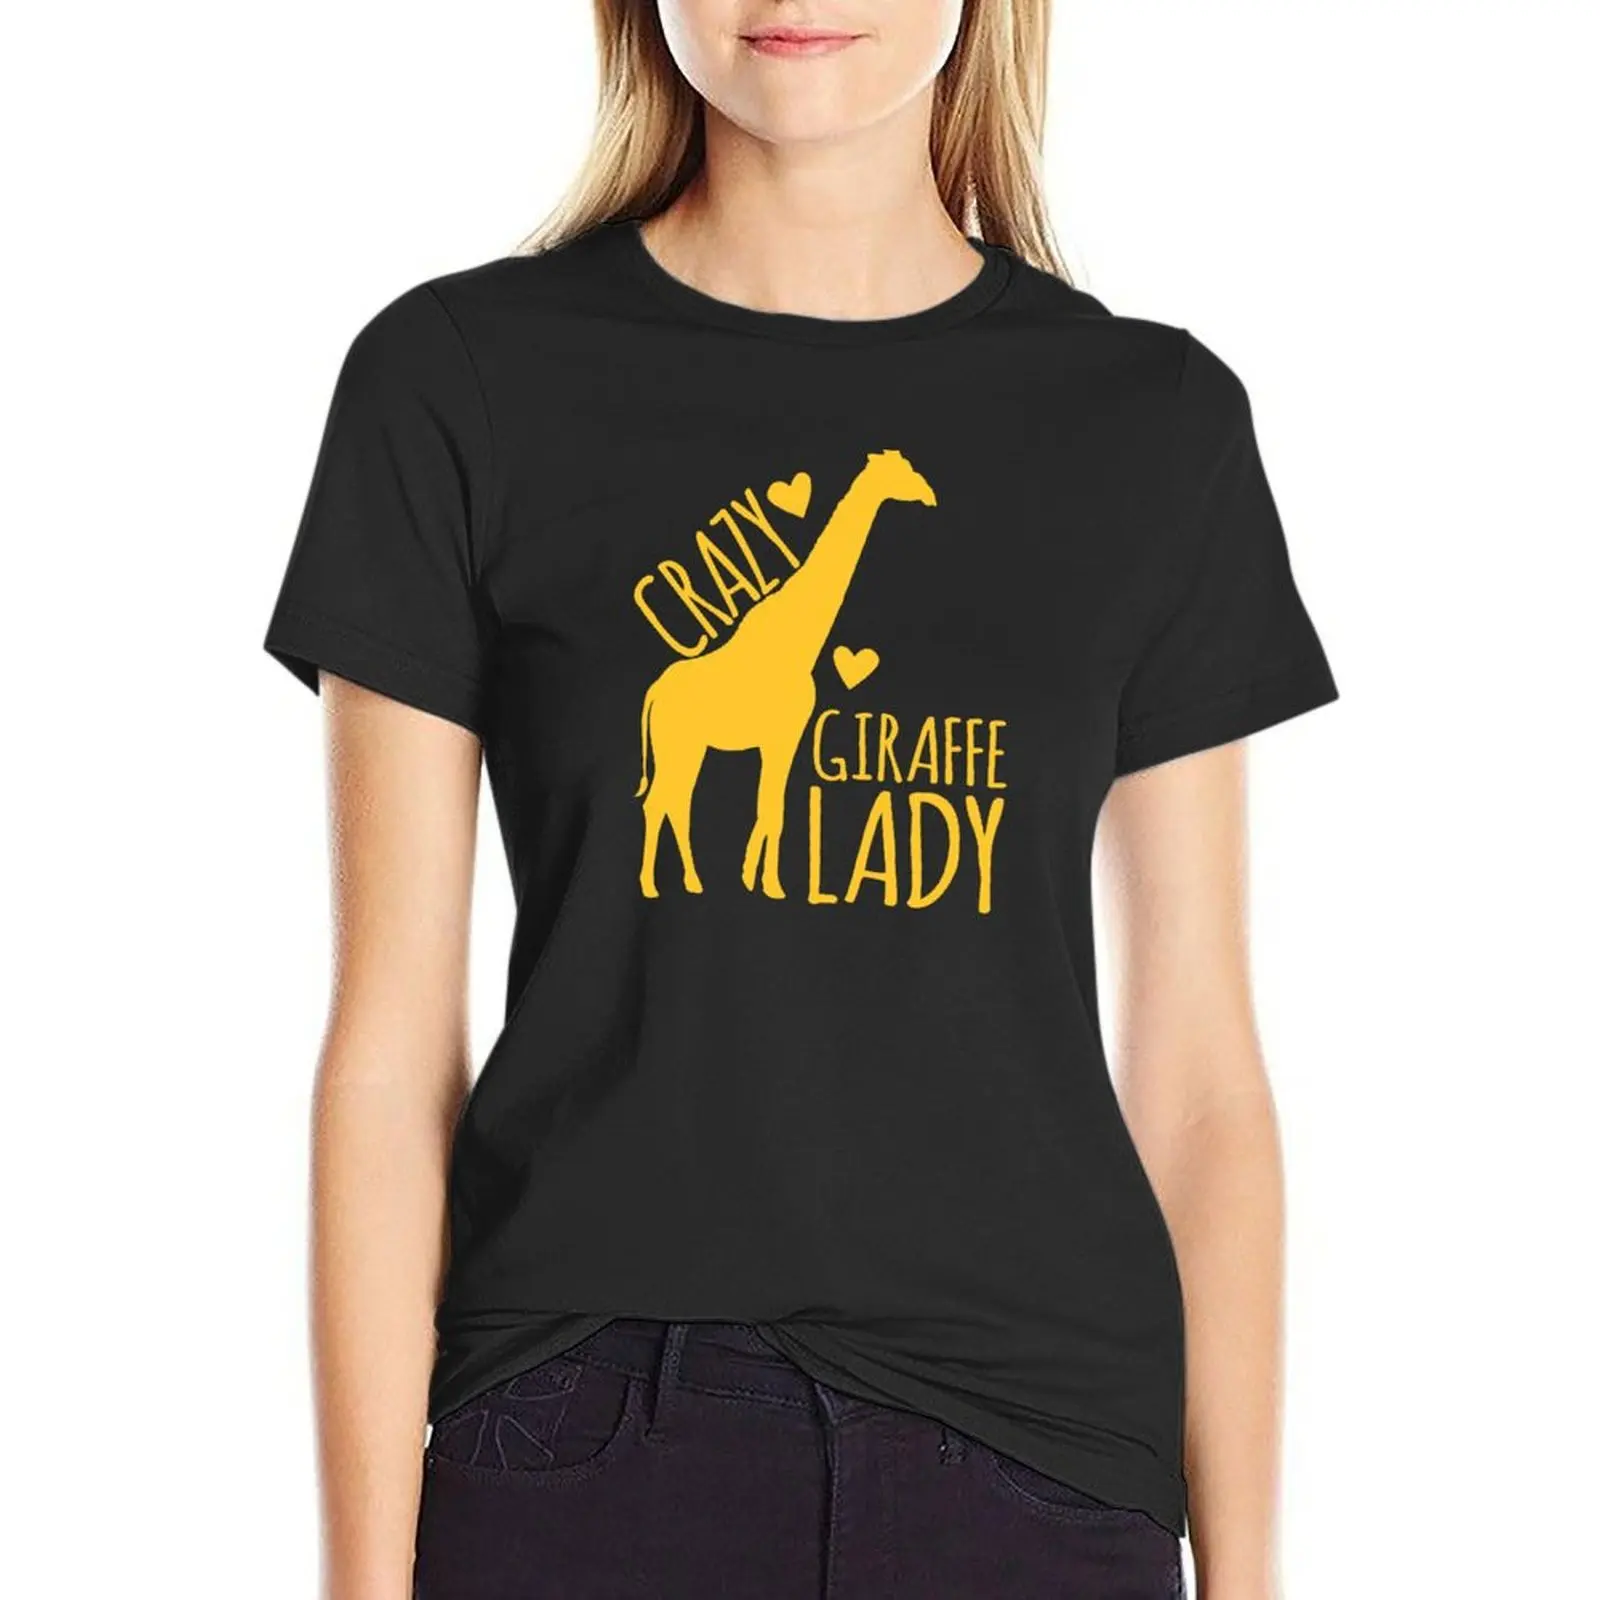 

CRAZY Giraffe Lady T-shirt tees summer top cute clothes black t shirts for Women